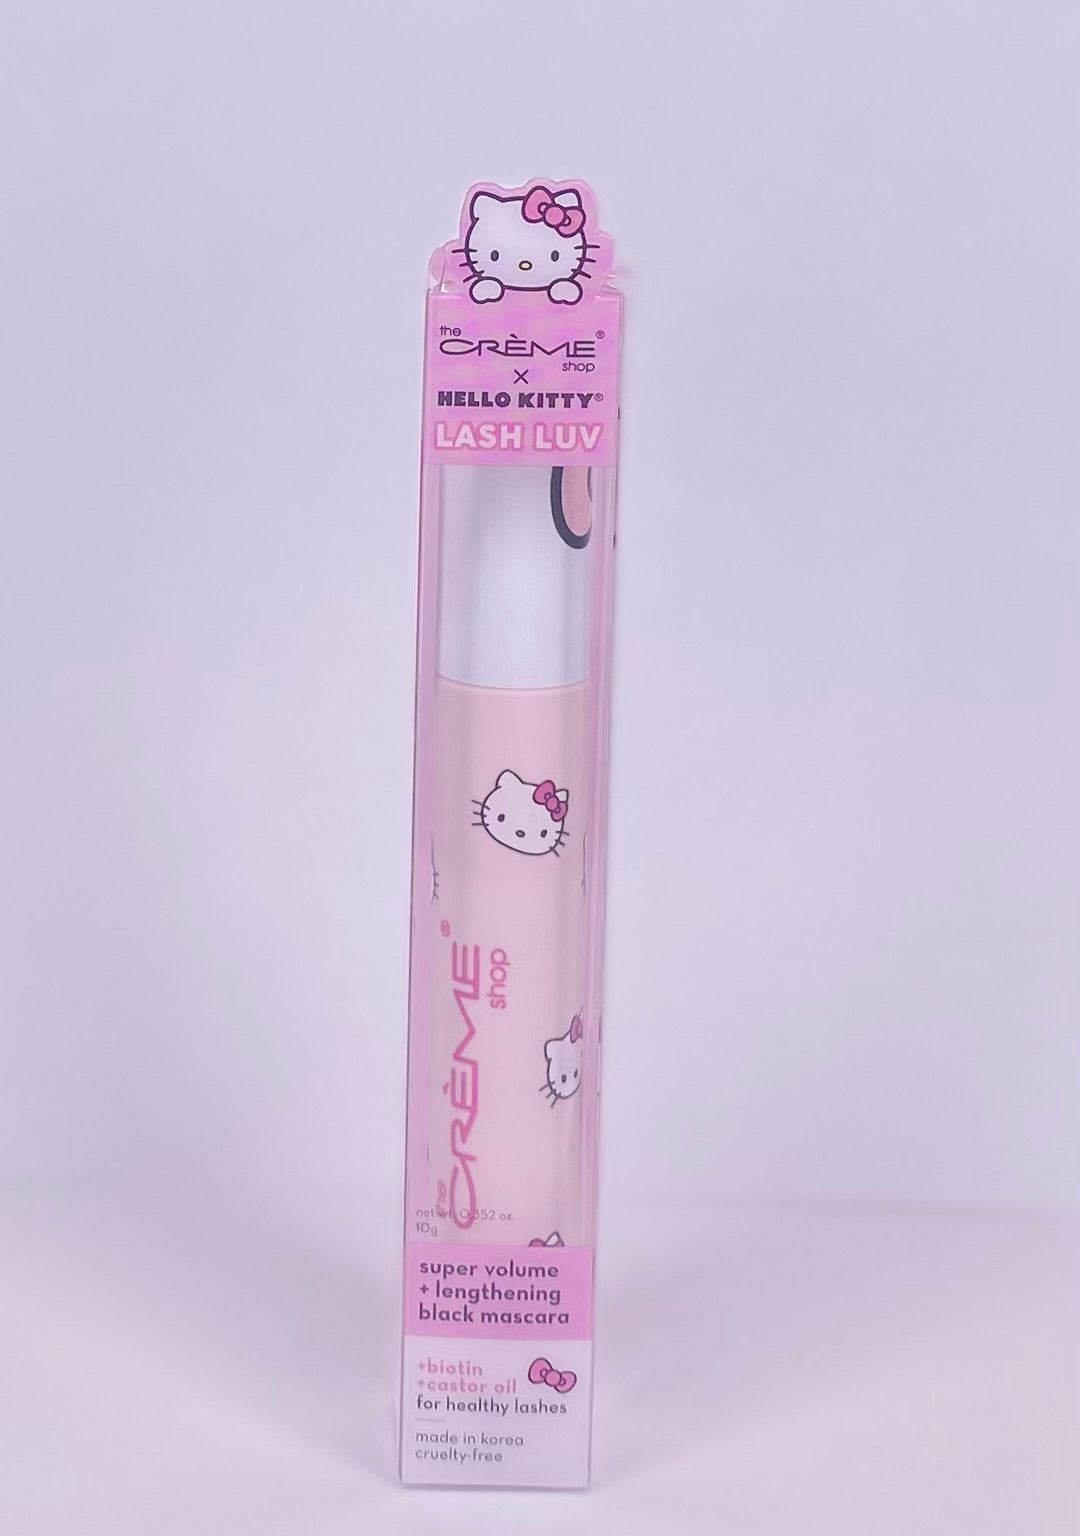 The Crème Shop x Hello Kitty Lash Luv Mascara